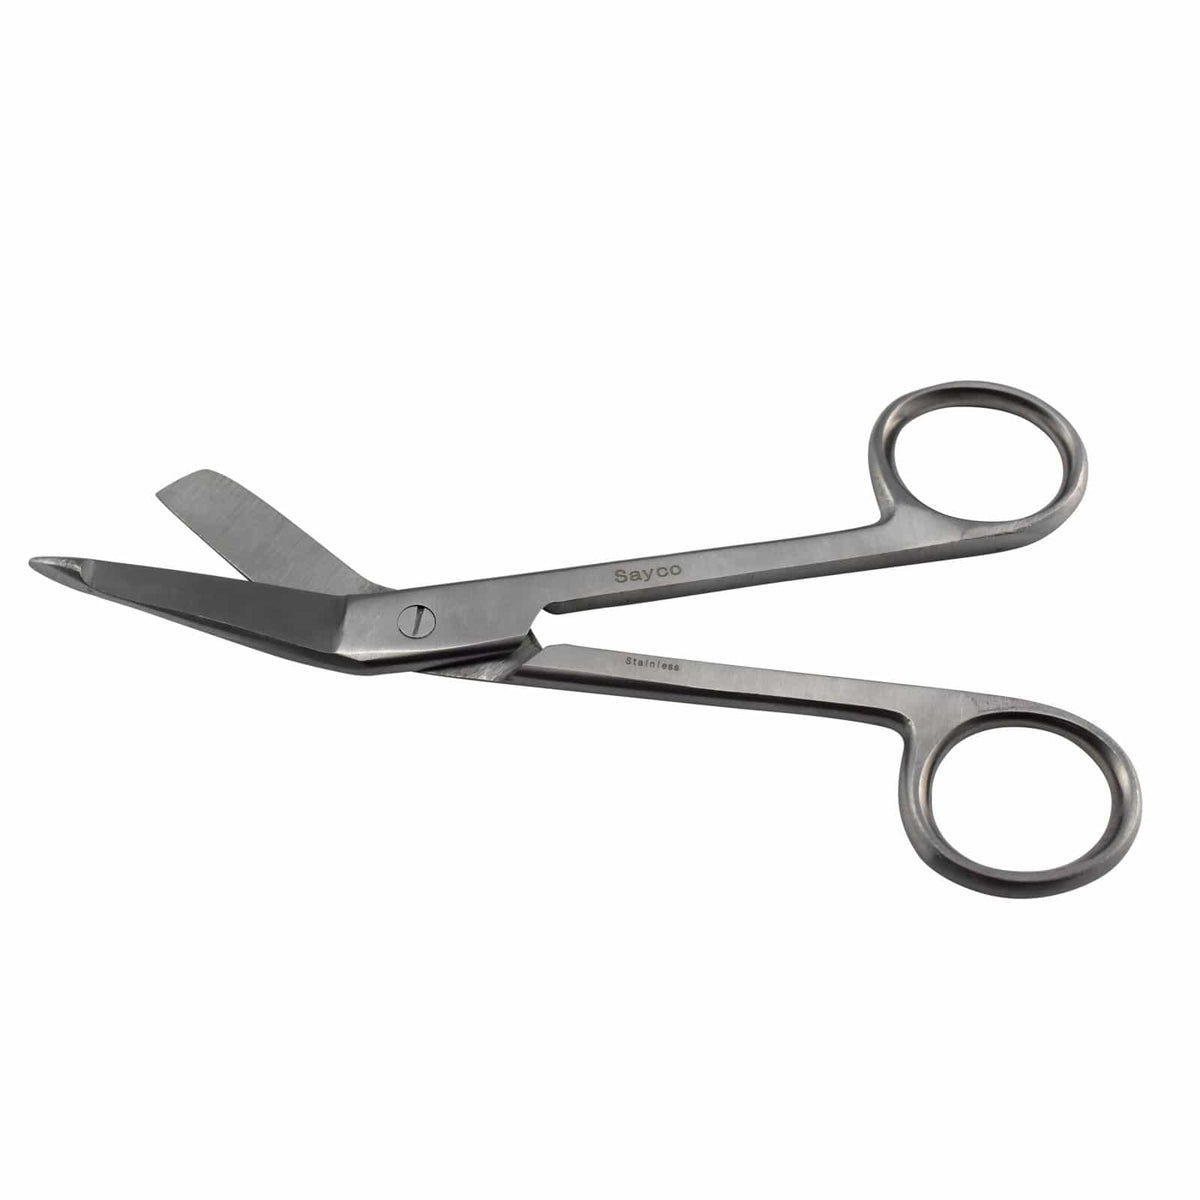 Sayco Surgical Instruments 14.5cm Sayco Lister Bandage Scissors